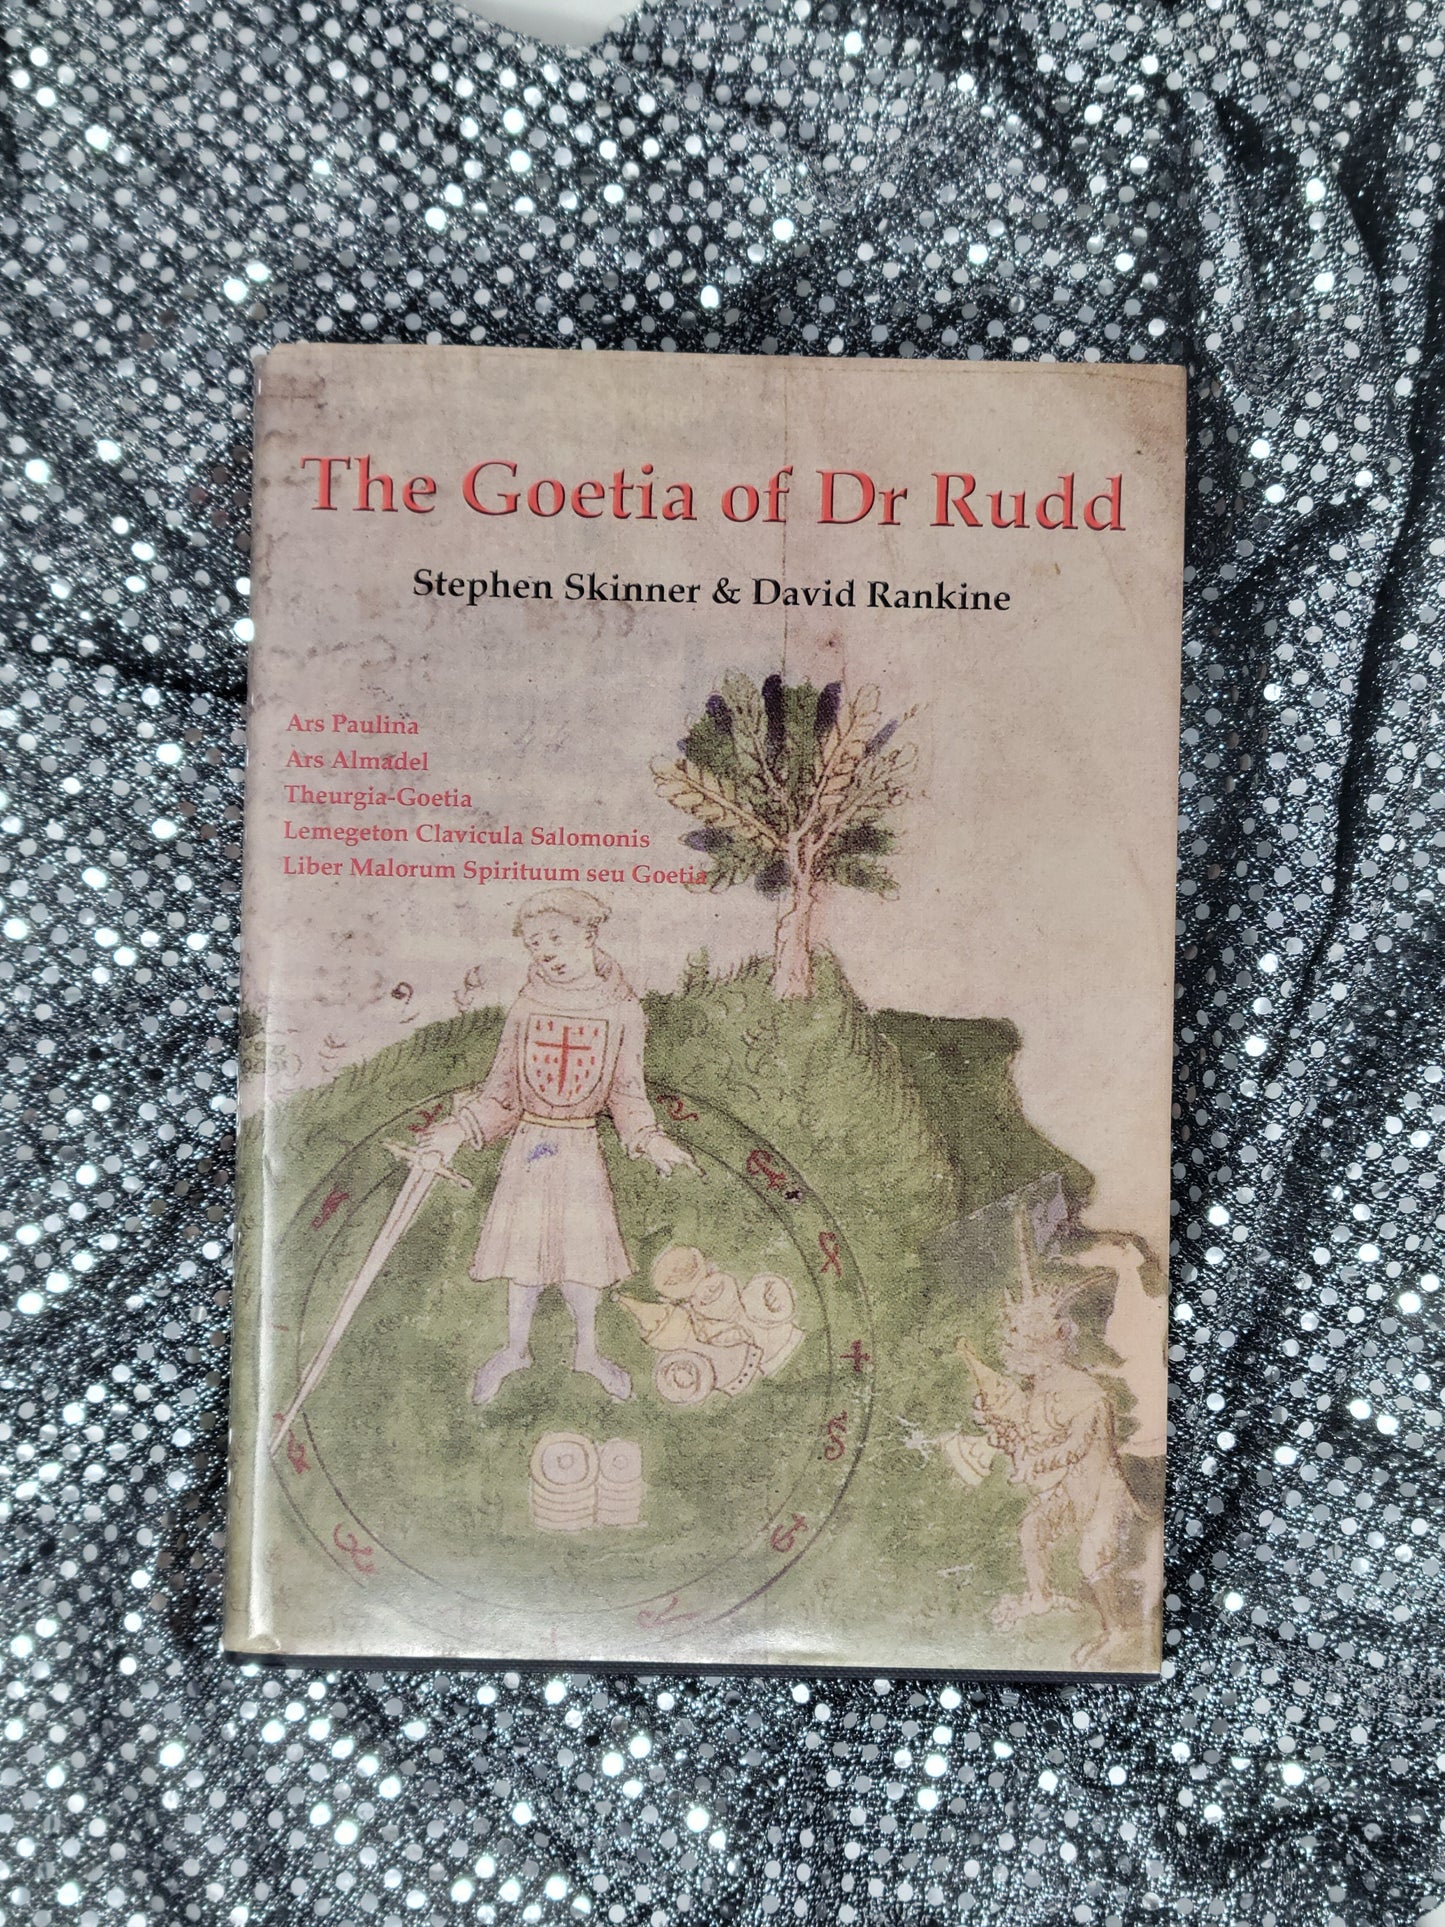 The Goetia of Dr. Rudd - BY DR STEPHEN SKINNER, DAVID RANKINE